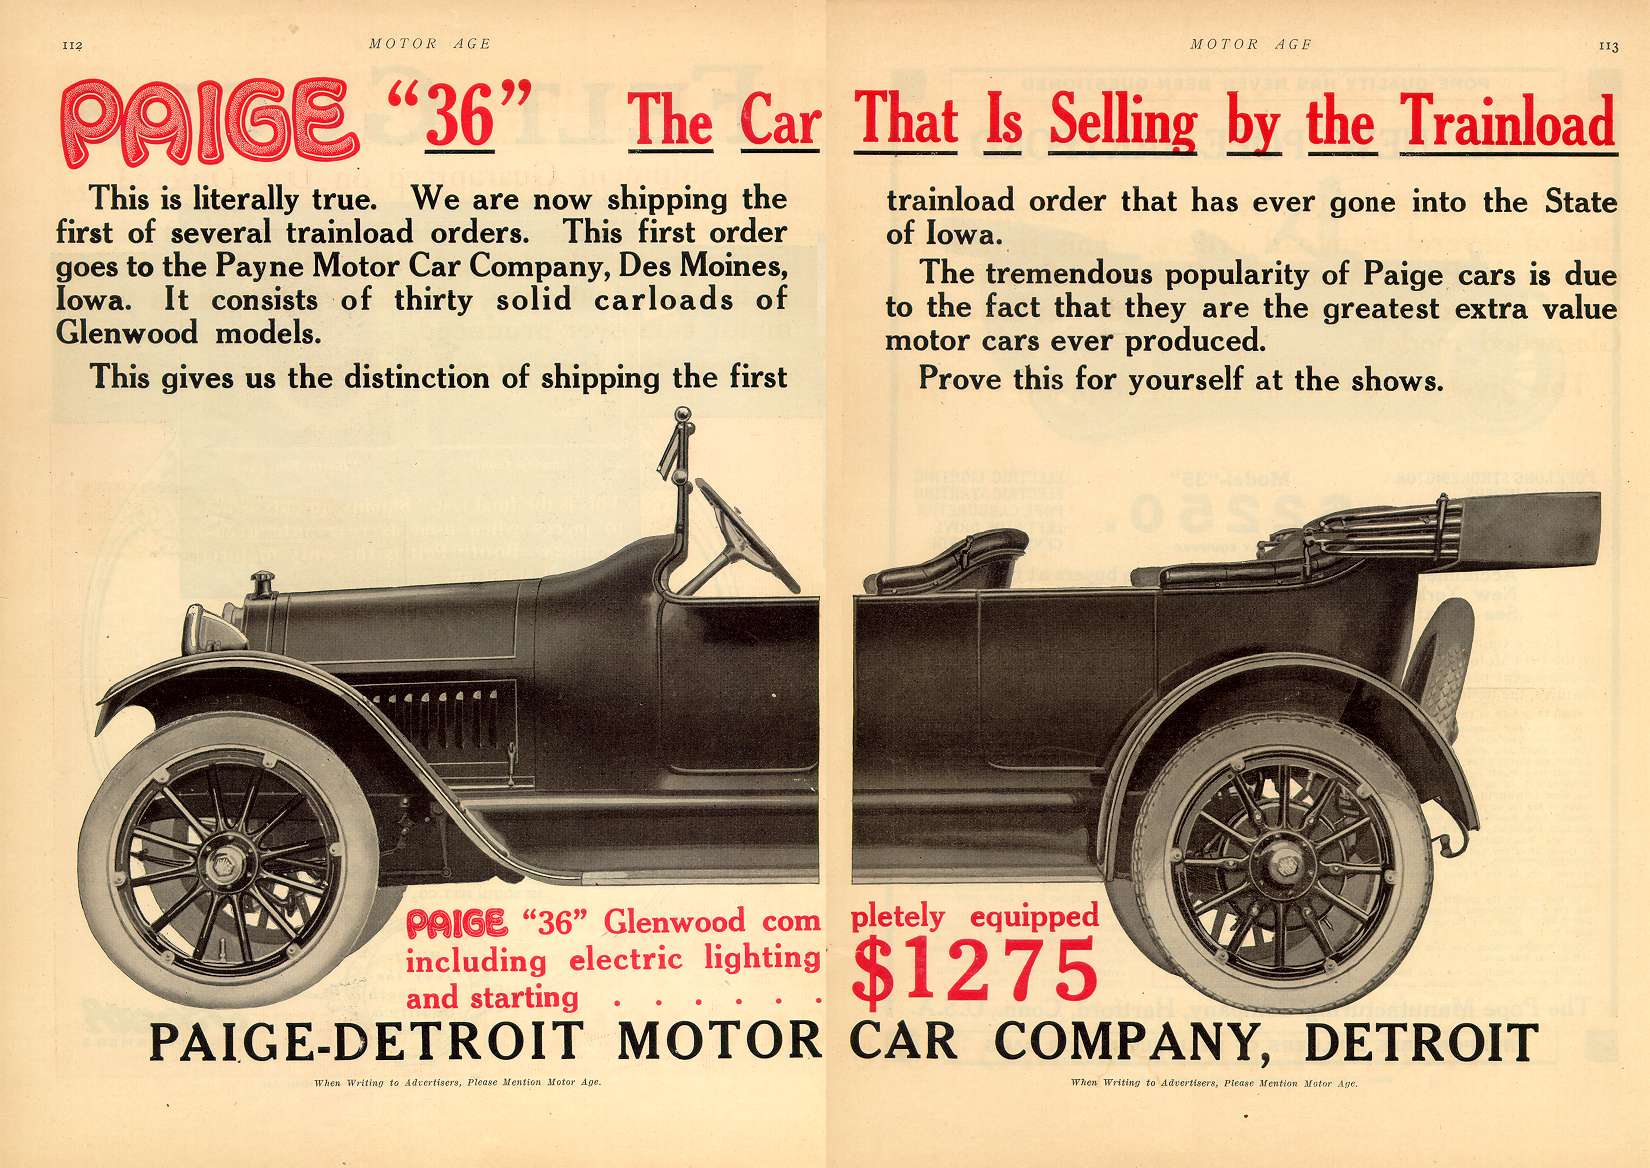 1914 Motor Age ad